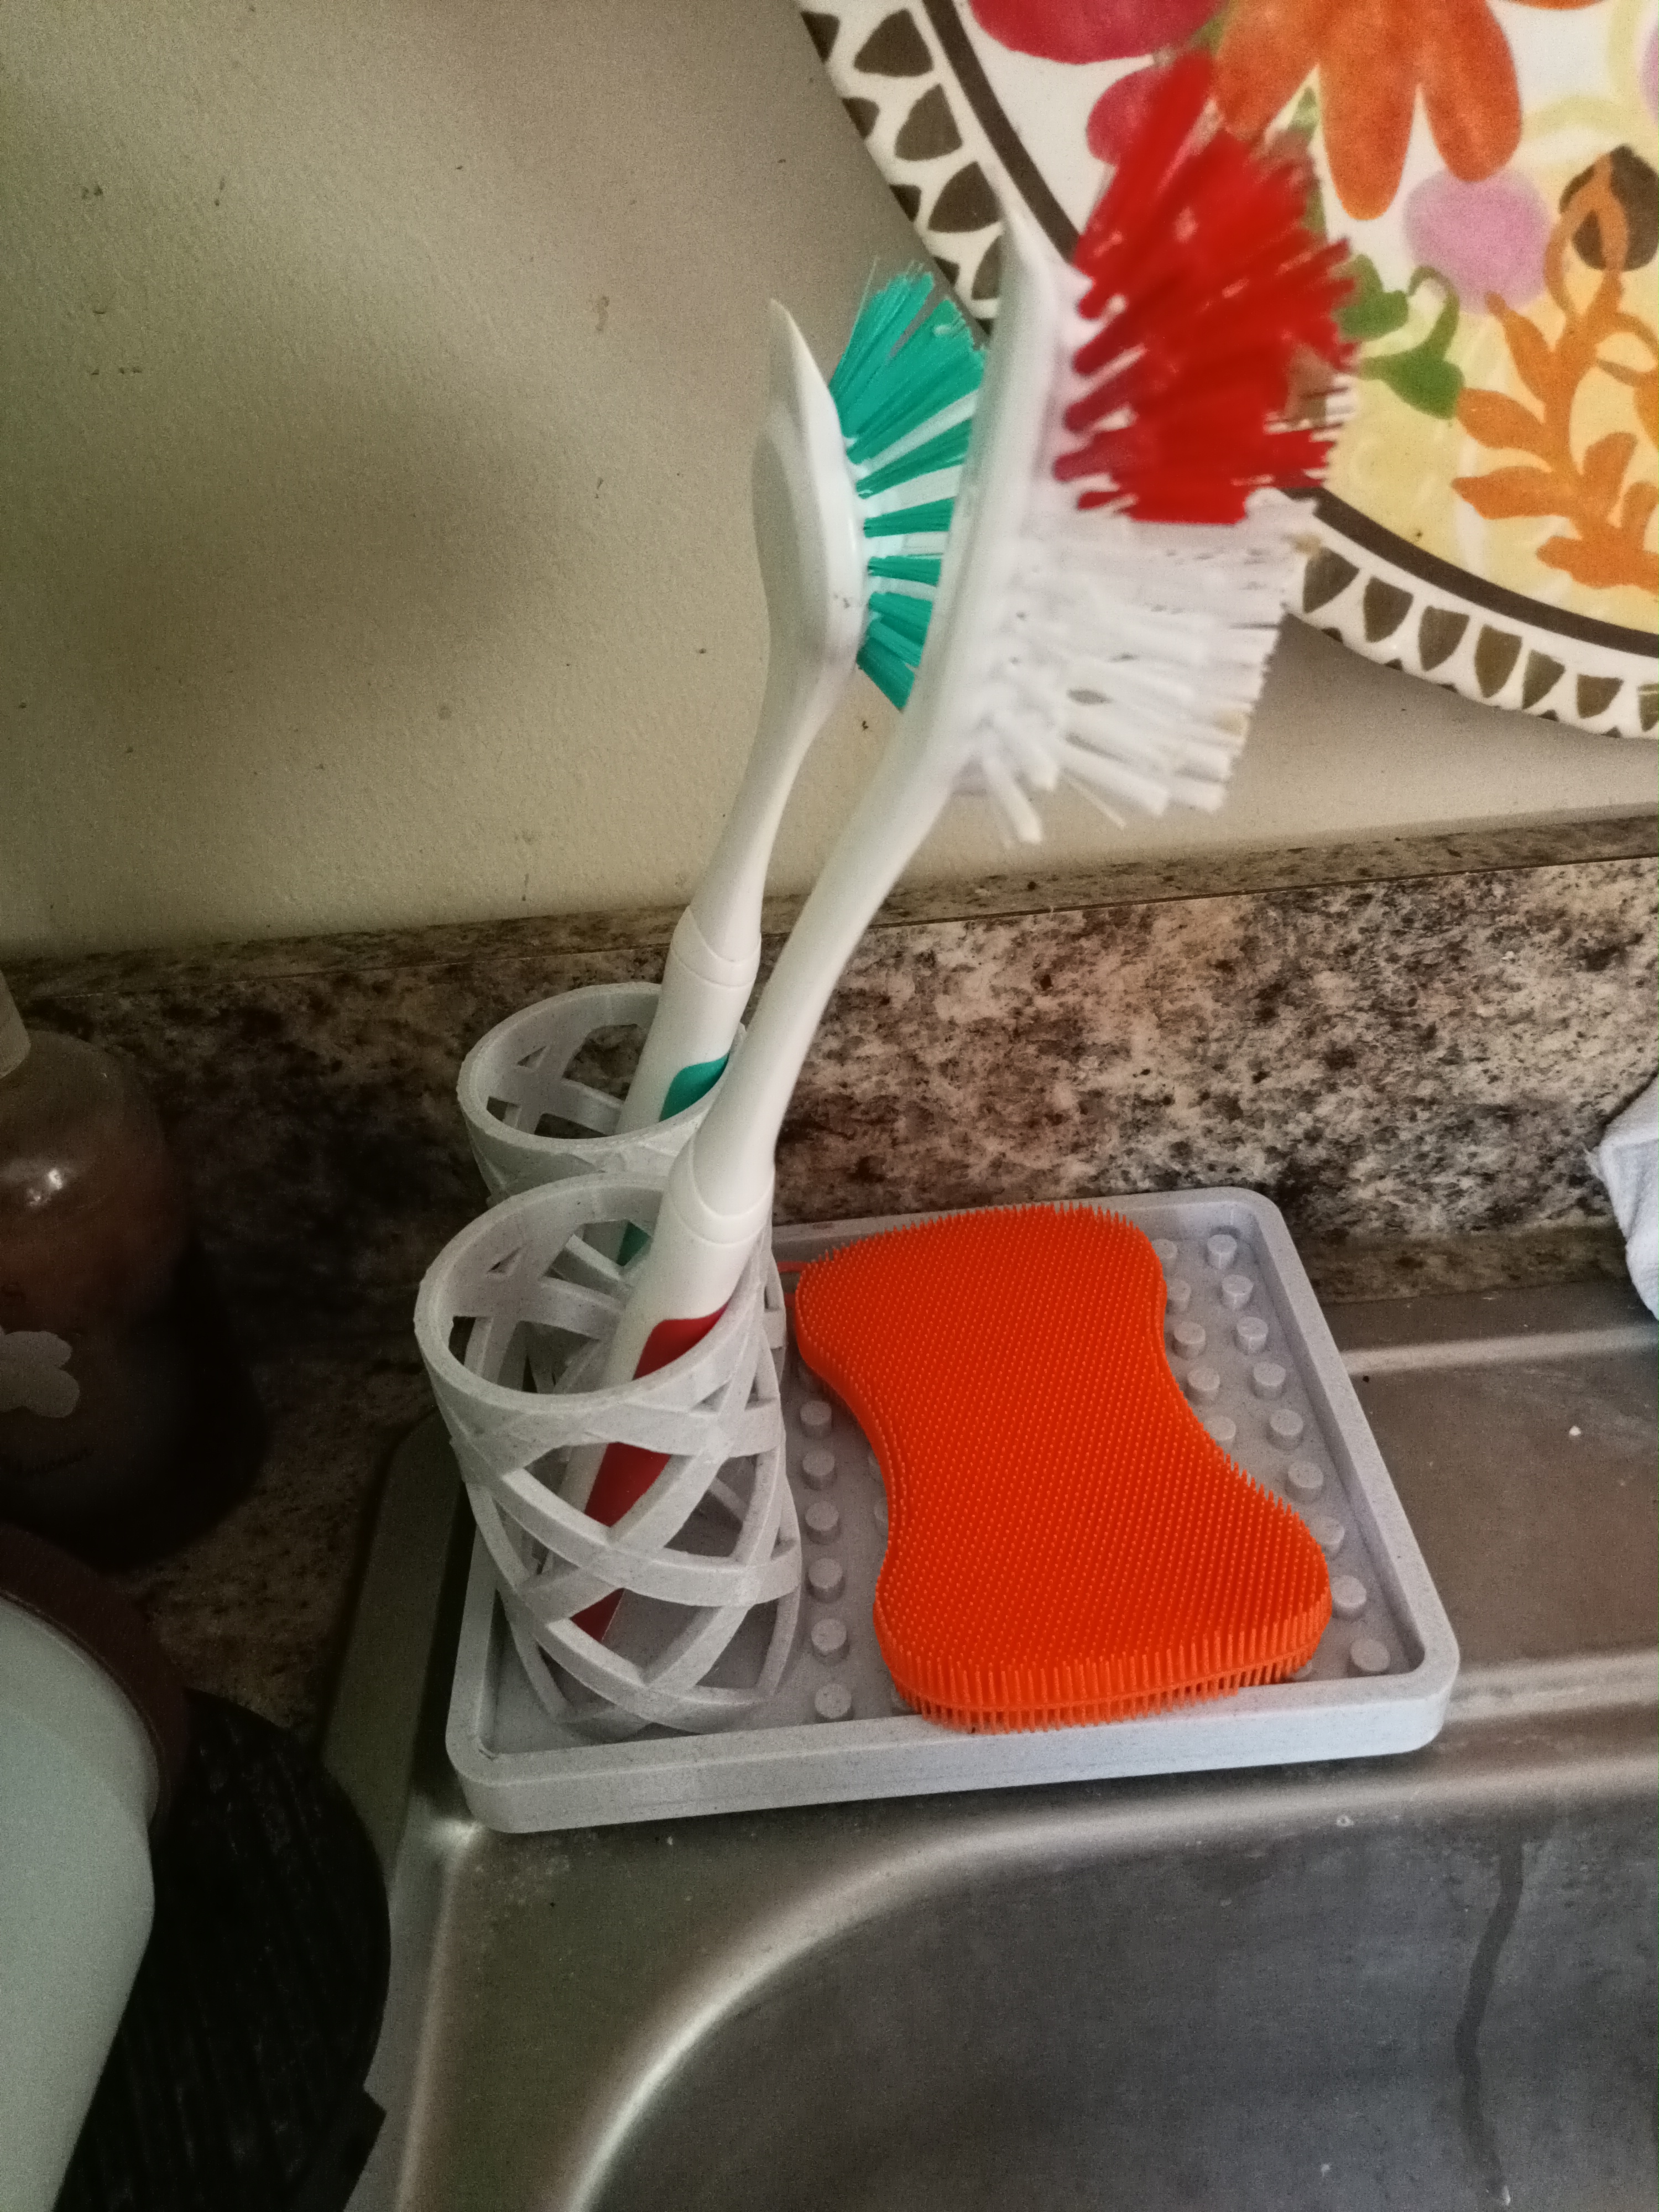 One sponge bigger brush holder Remix Neo Kitchen Cleaning Plate